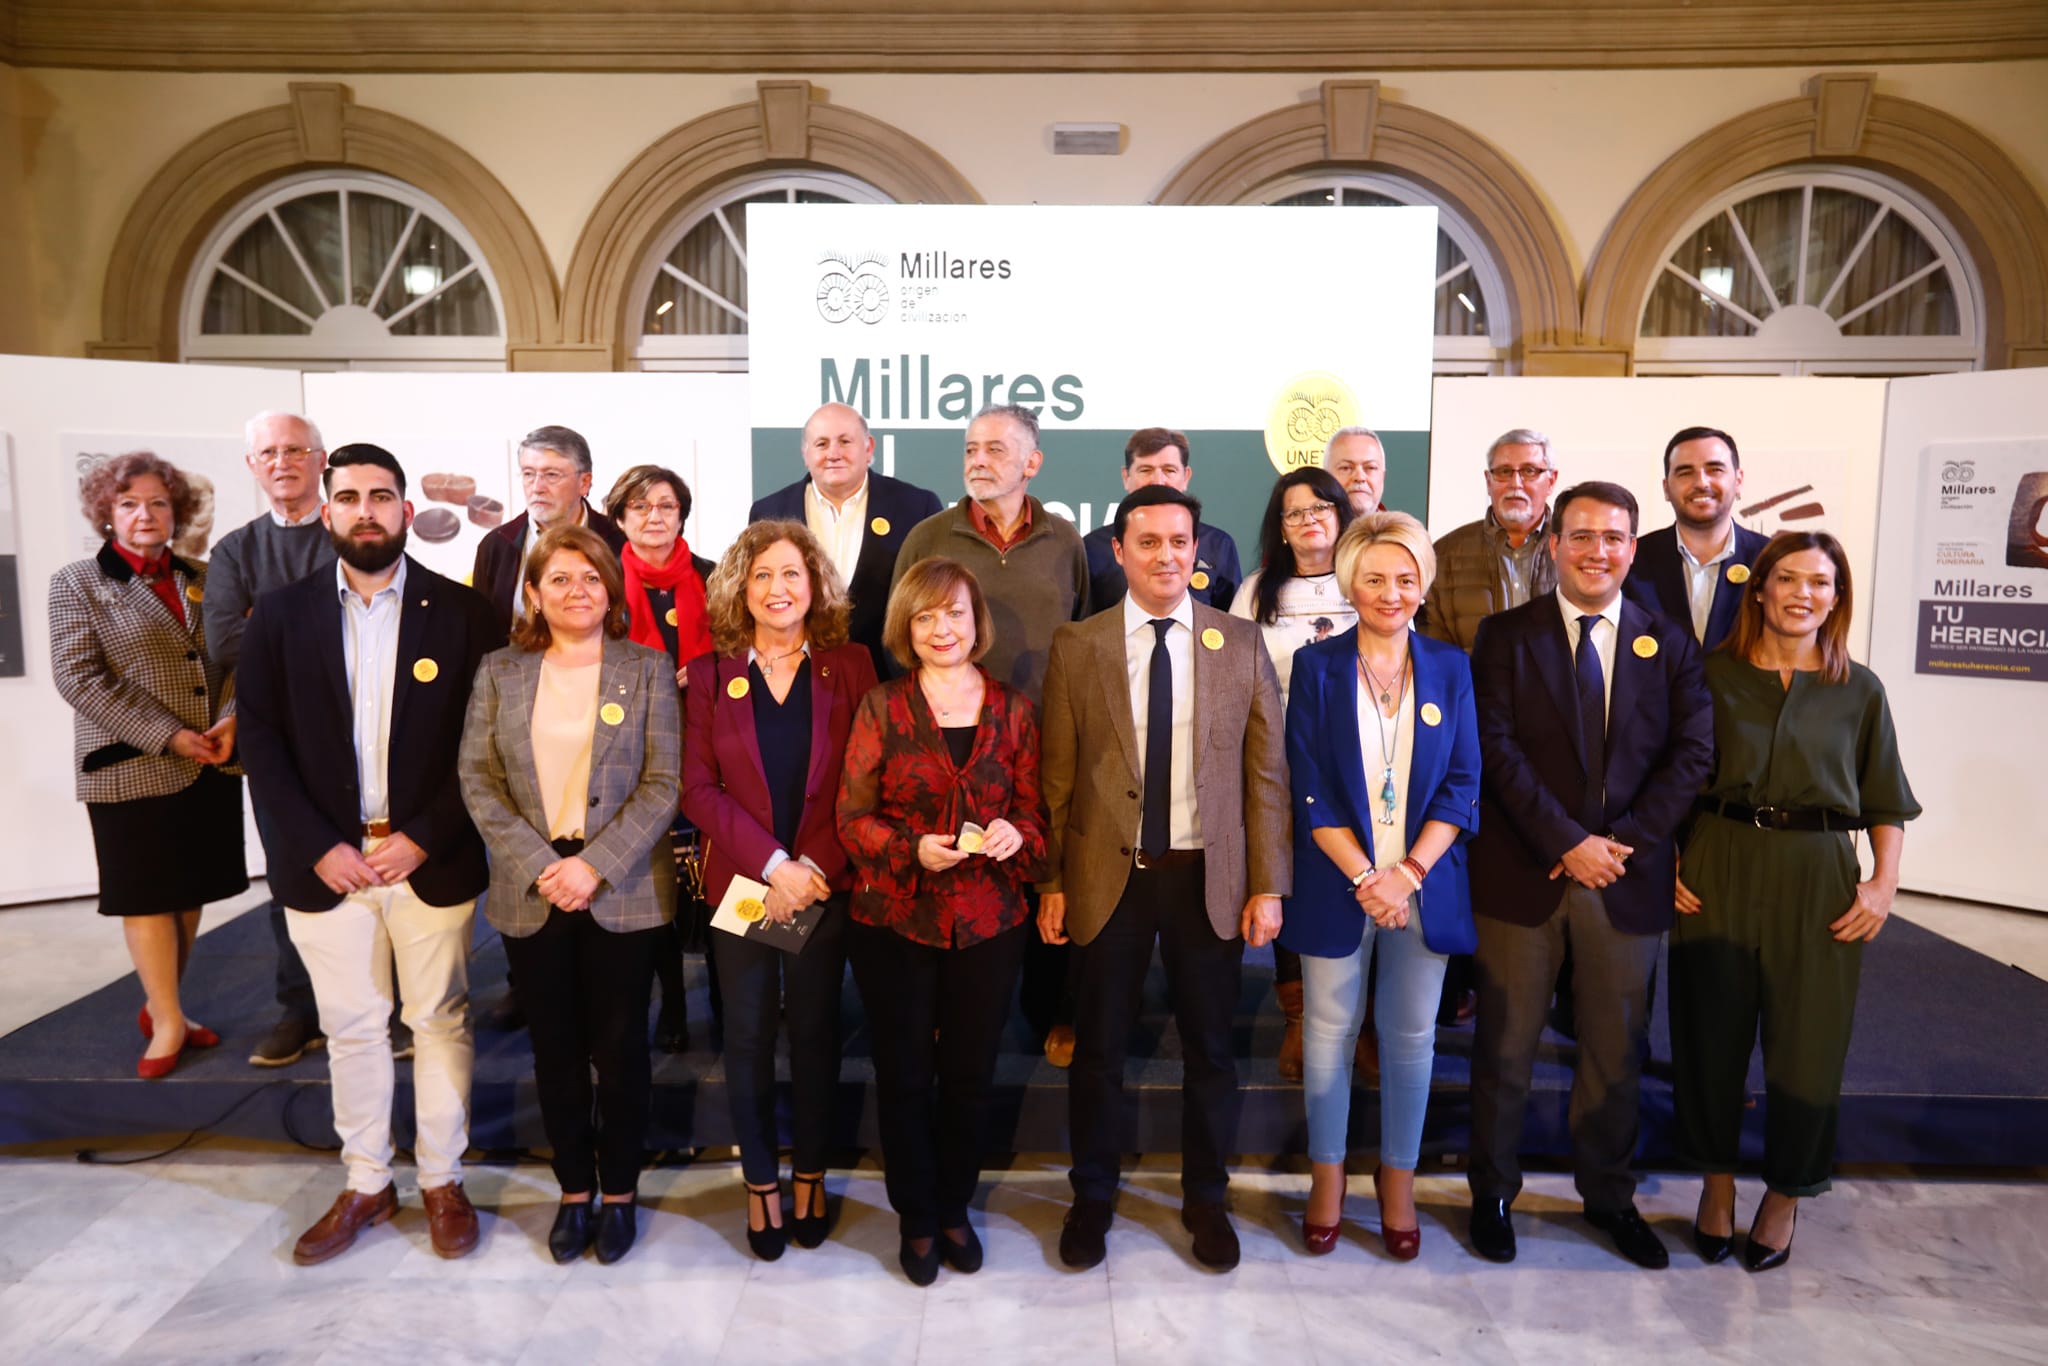 Millares, Tu Herencia - Diputación Almería